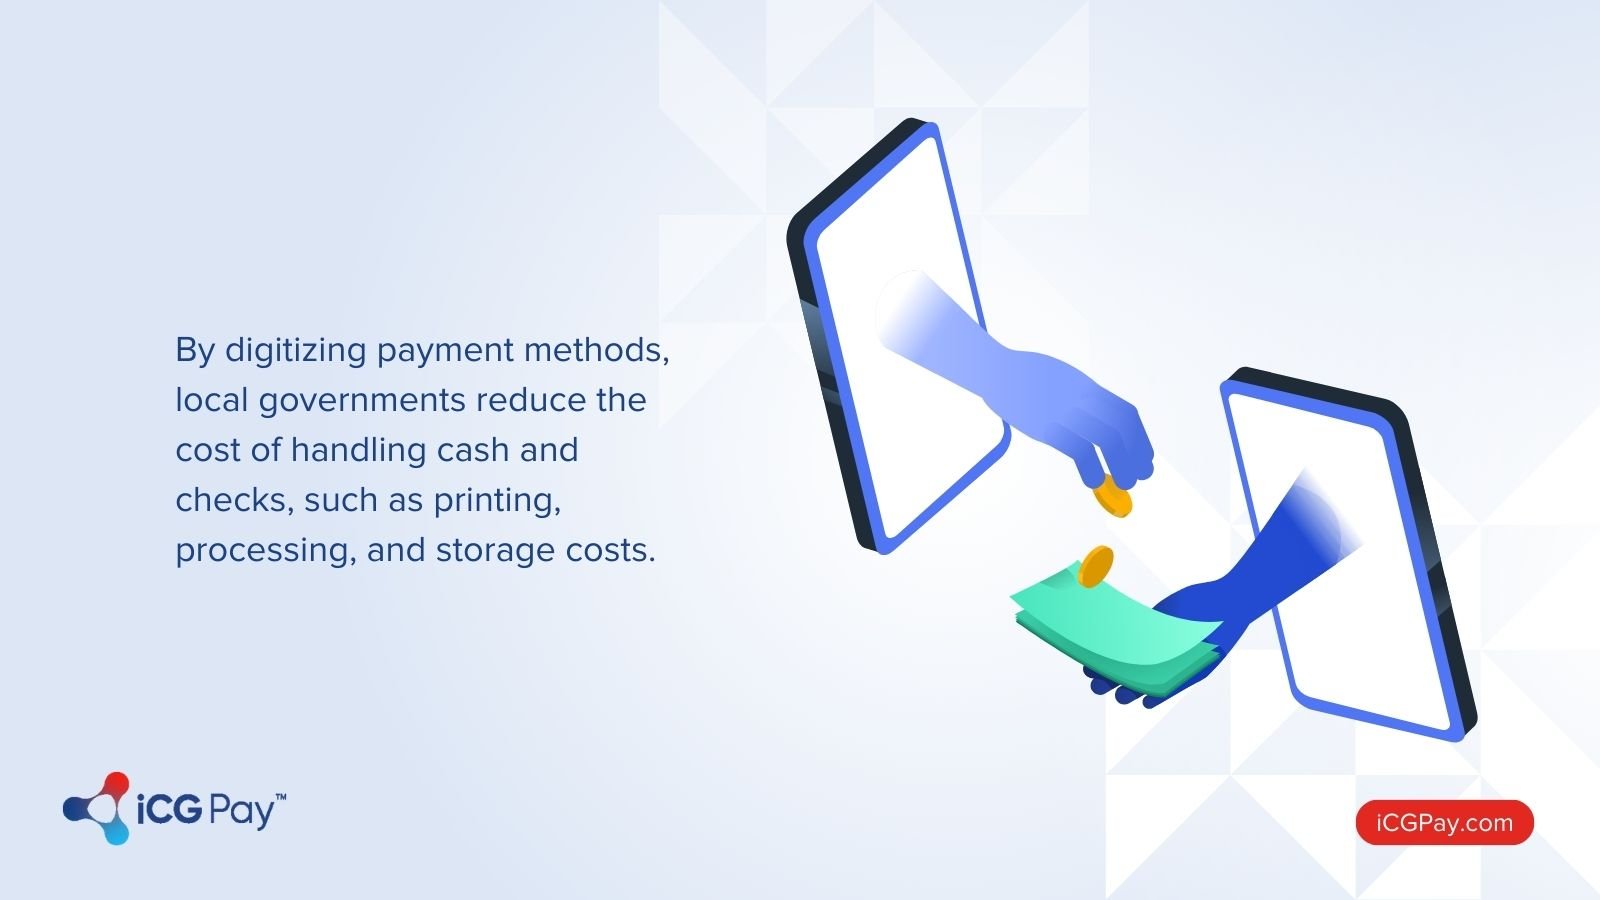 Digitizing payment methods